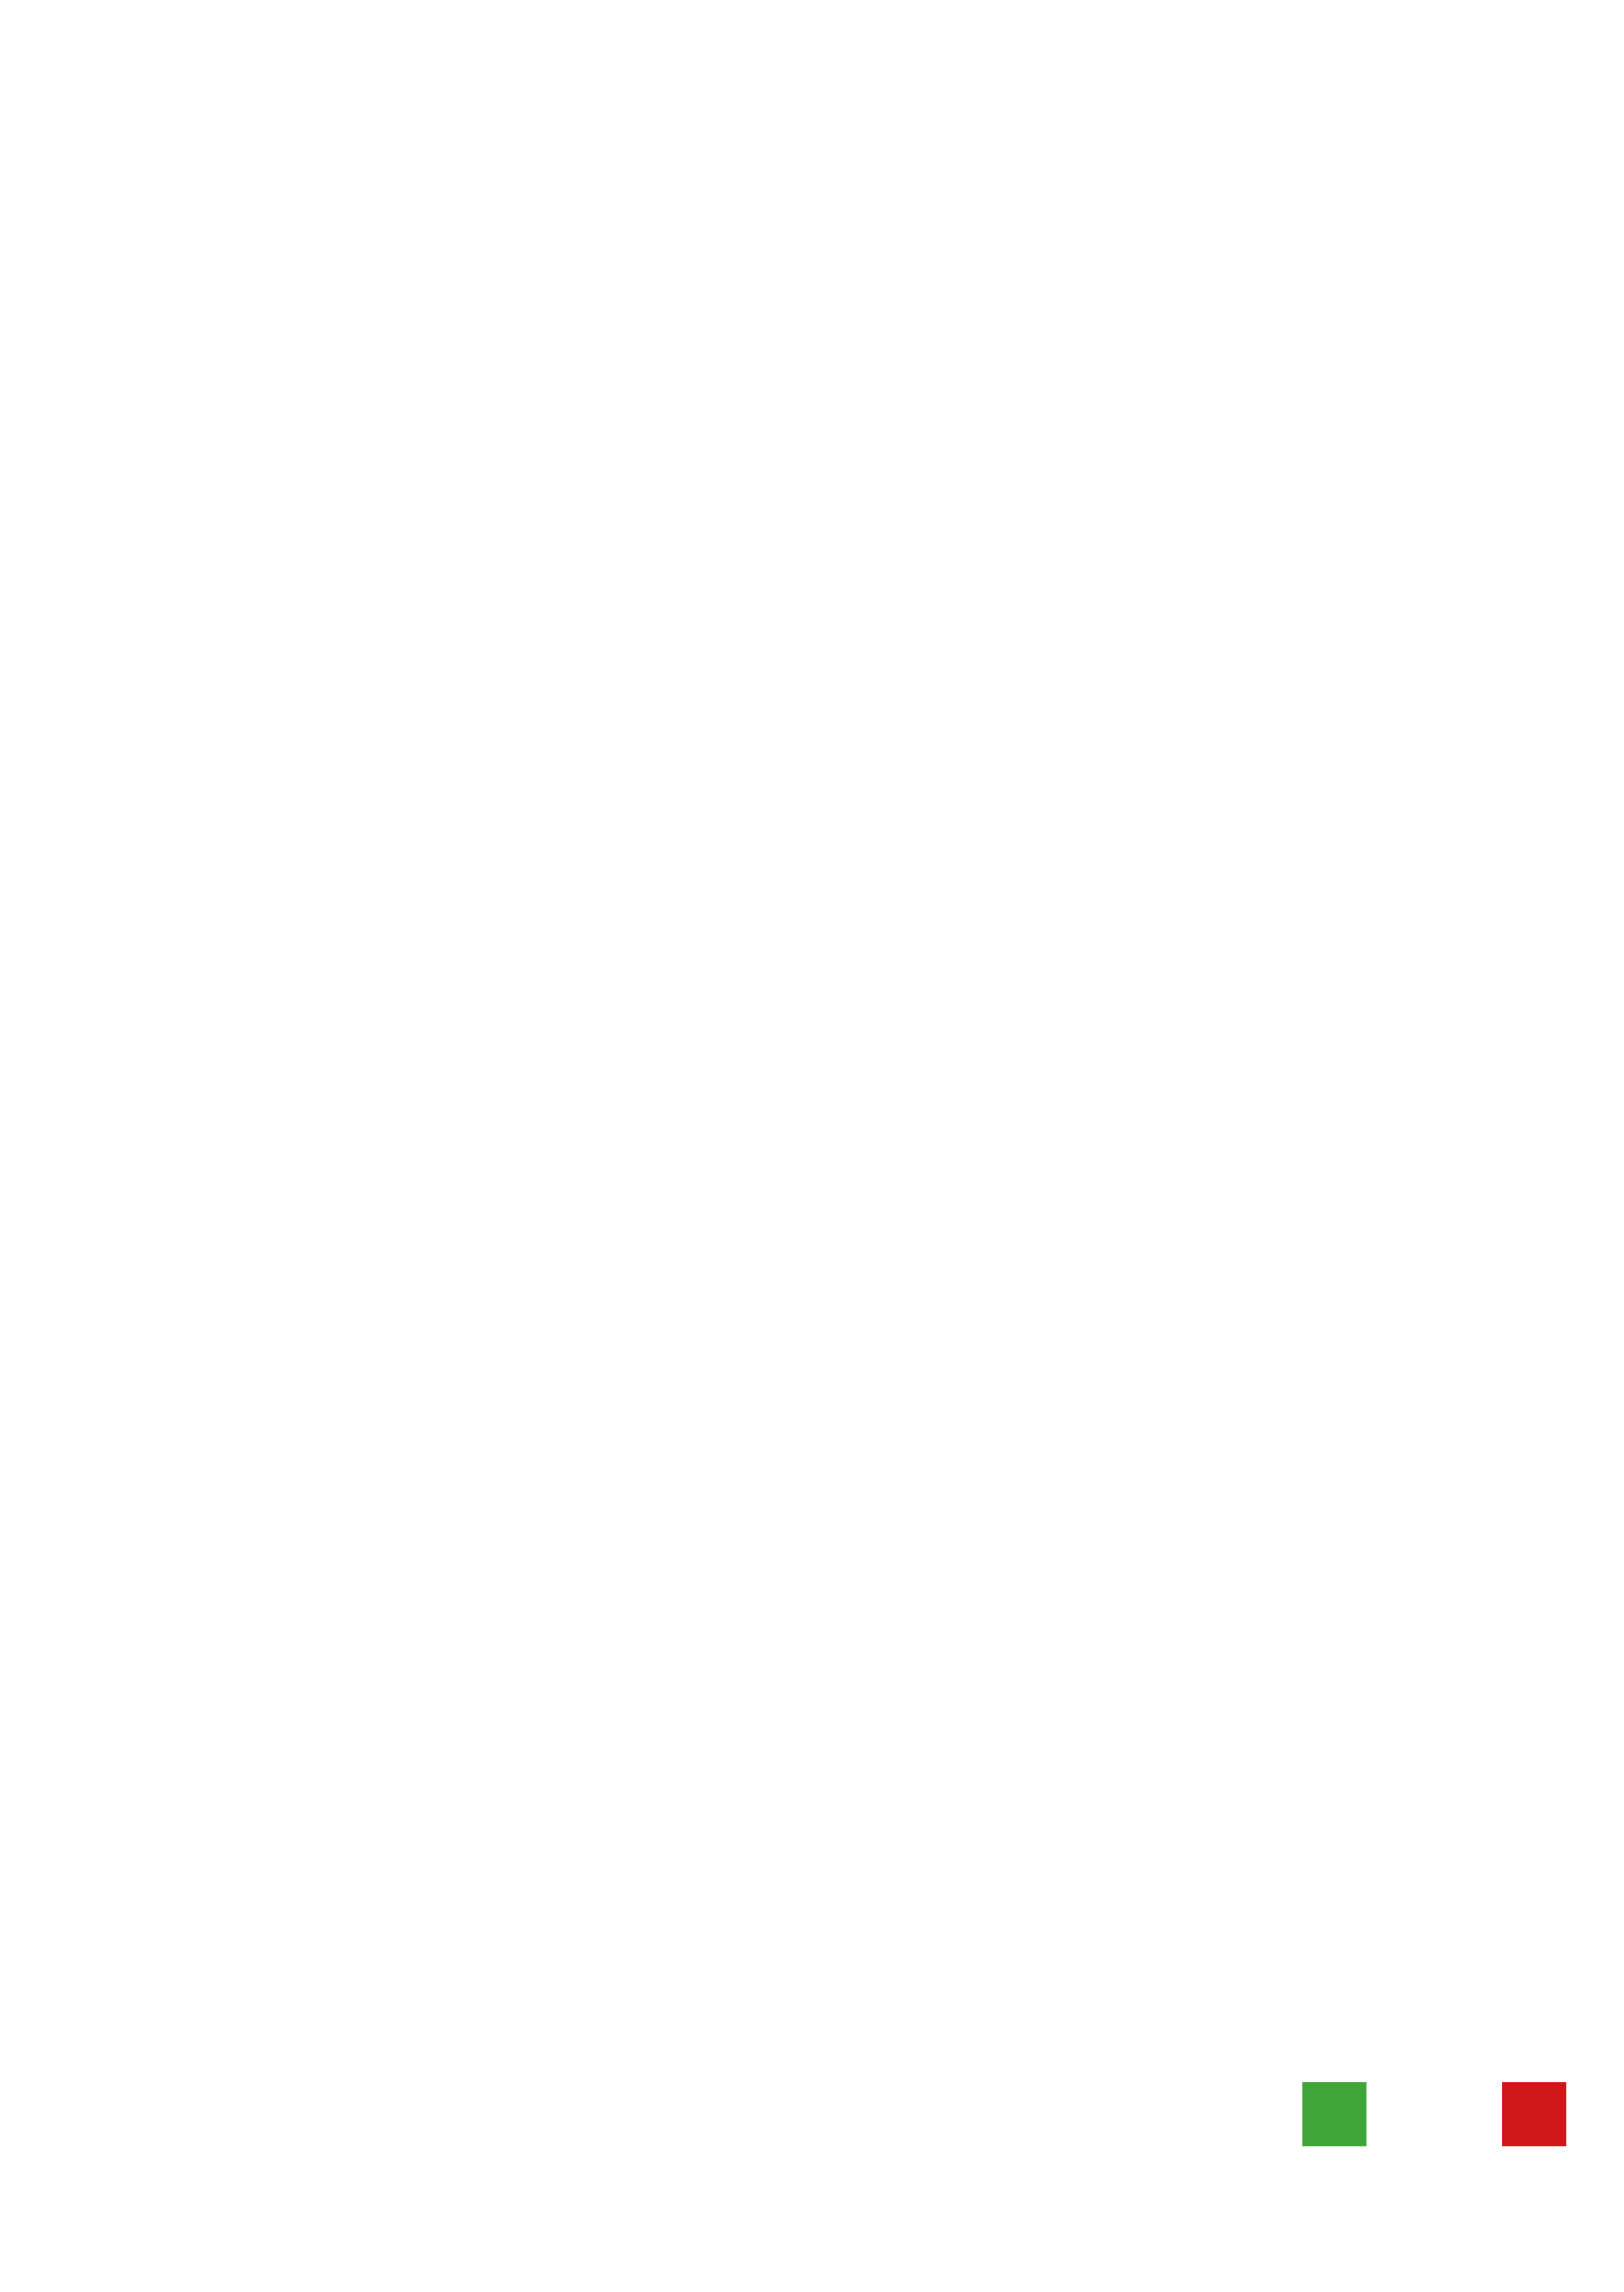 Blu companu logo white Nuovo